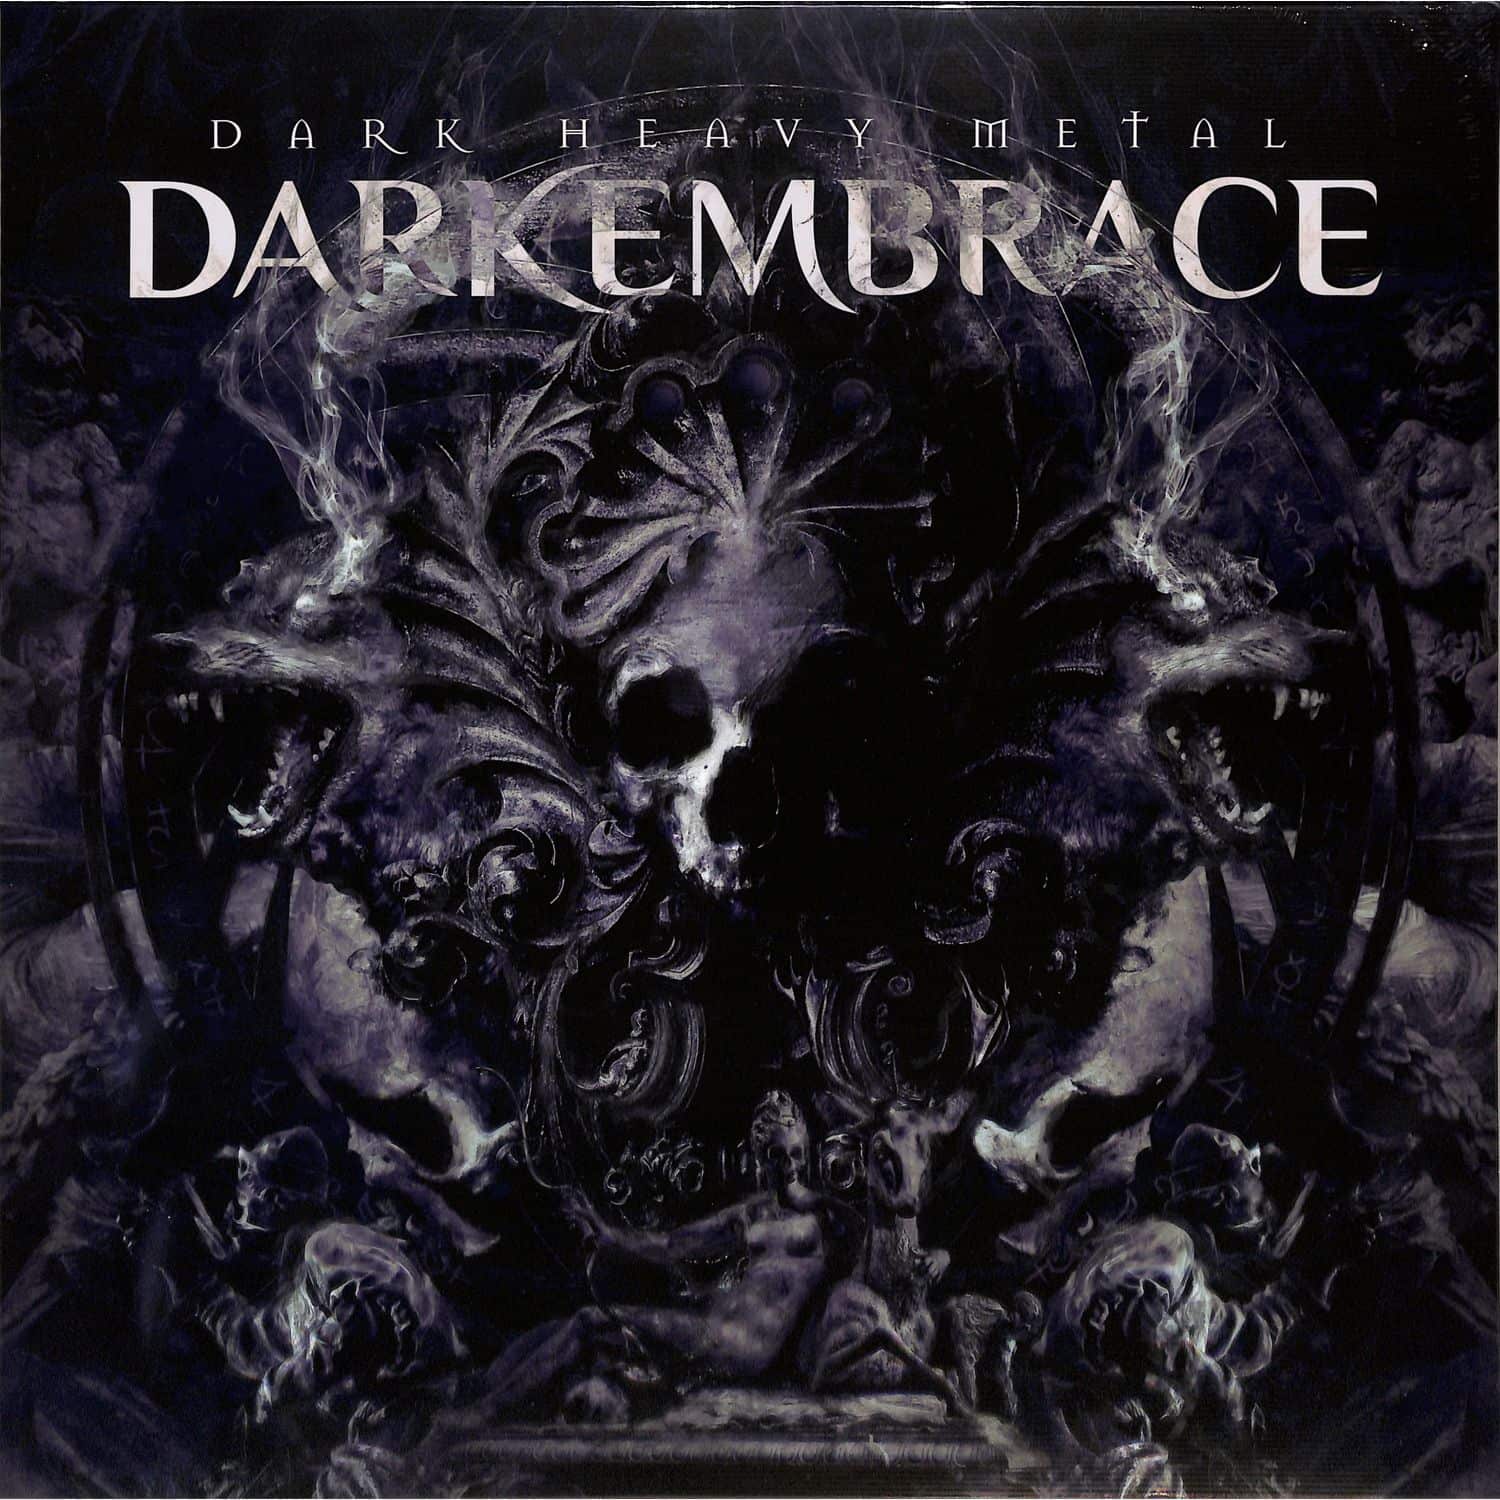 Dark Embrace - DARK HEAVY METAL 